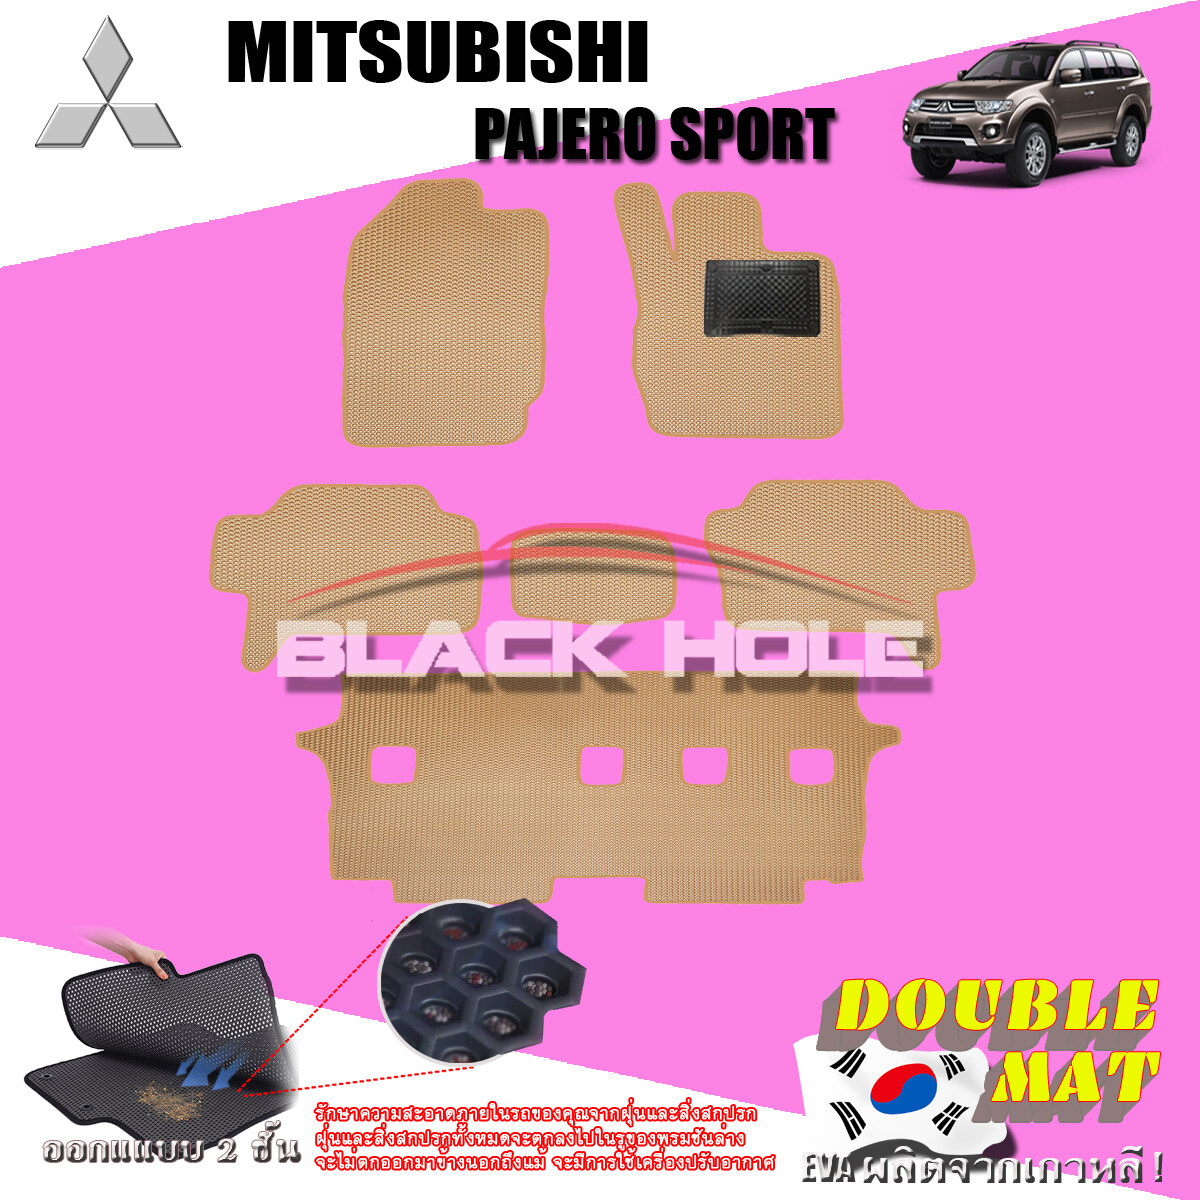 Mitsubishi Pajero Sport ปี 2008 - ปี 2014 พรมรถยนต์Pajero พรมเข้ารูปสองชั้นแบบรูรังผึ้ง Blackhole Double Mat (ชุดห้องโดยสาร) สี SET B ( 6 Pcs. )  Beige-สีเบจขอบเดิม ( 6 ชิ้น ) สี SET B ( 6 Pcs. )  Beige-สีเบจขอบเดิม ( 6 ชิ้น )